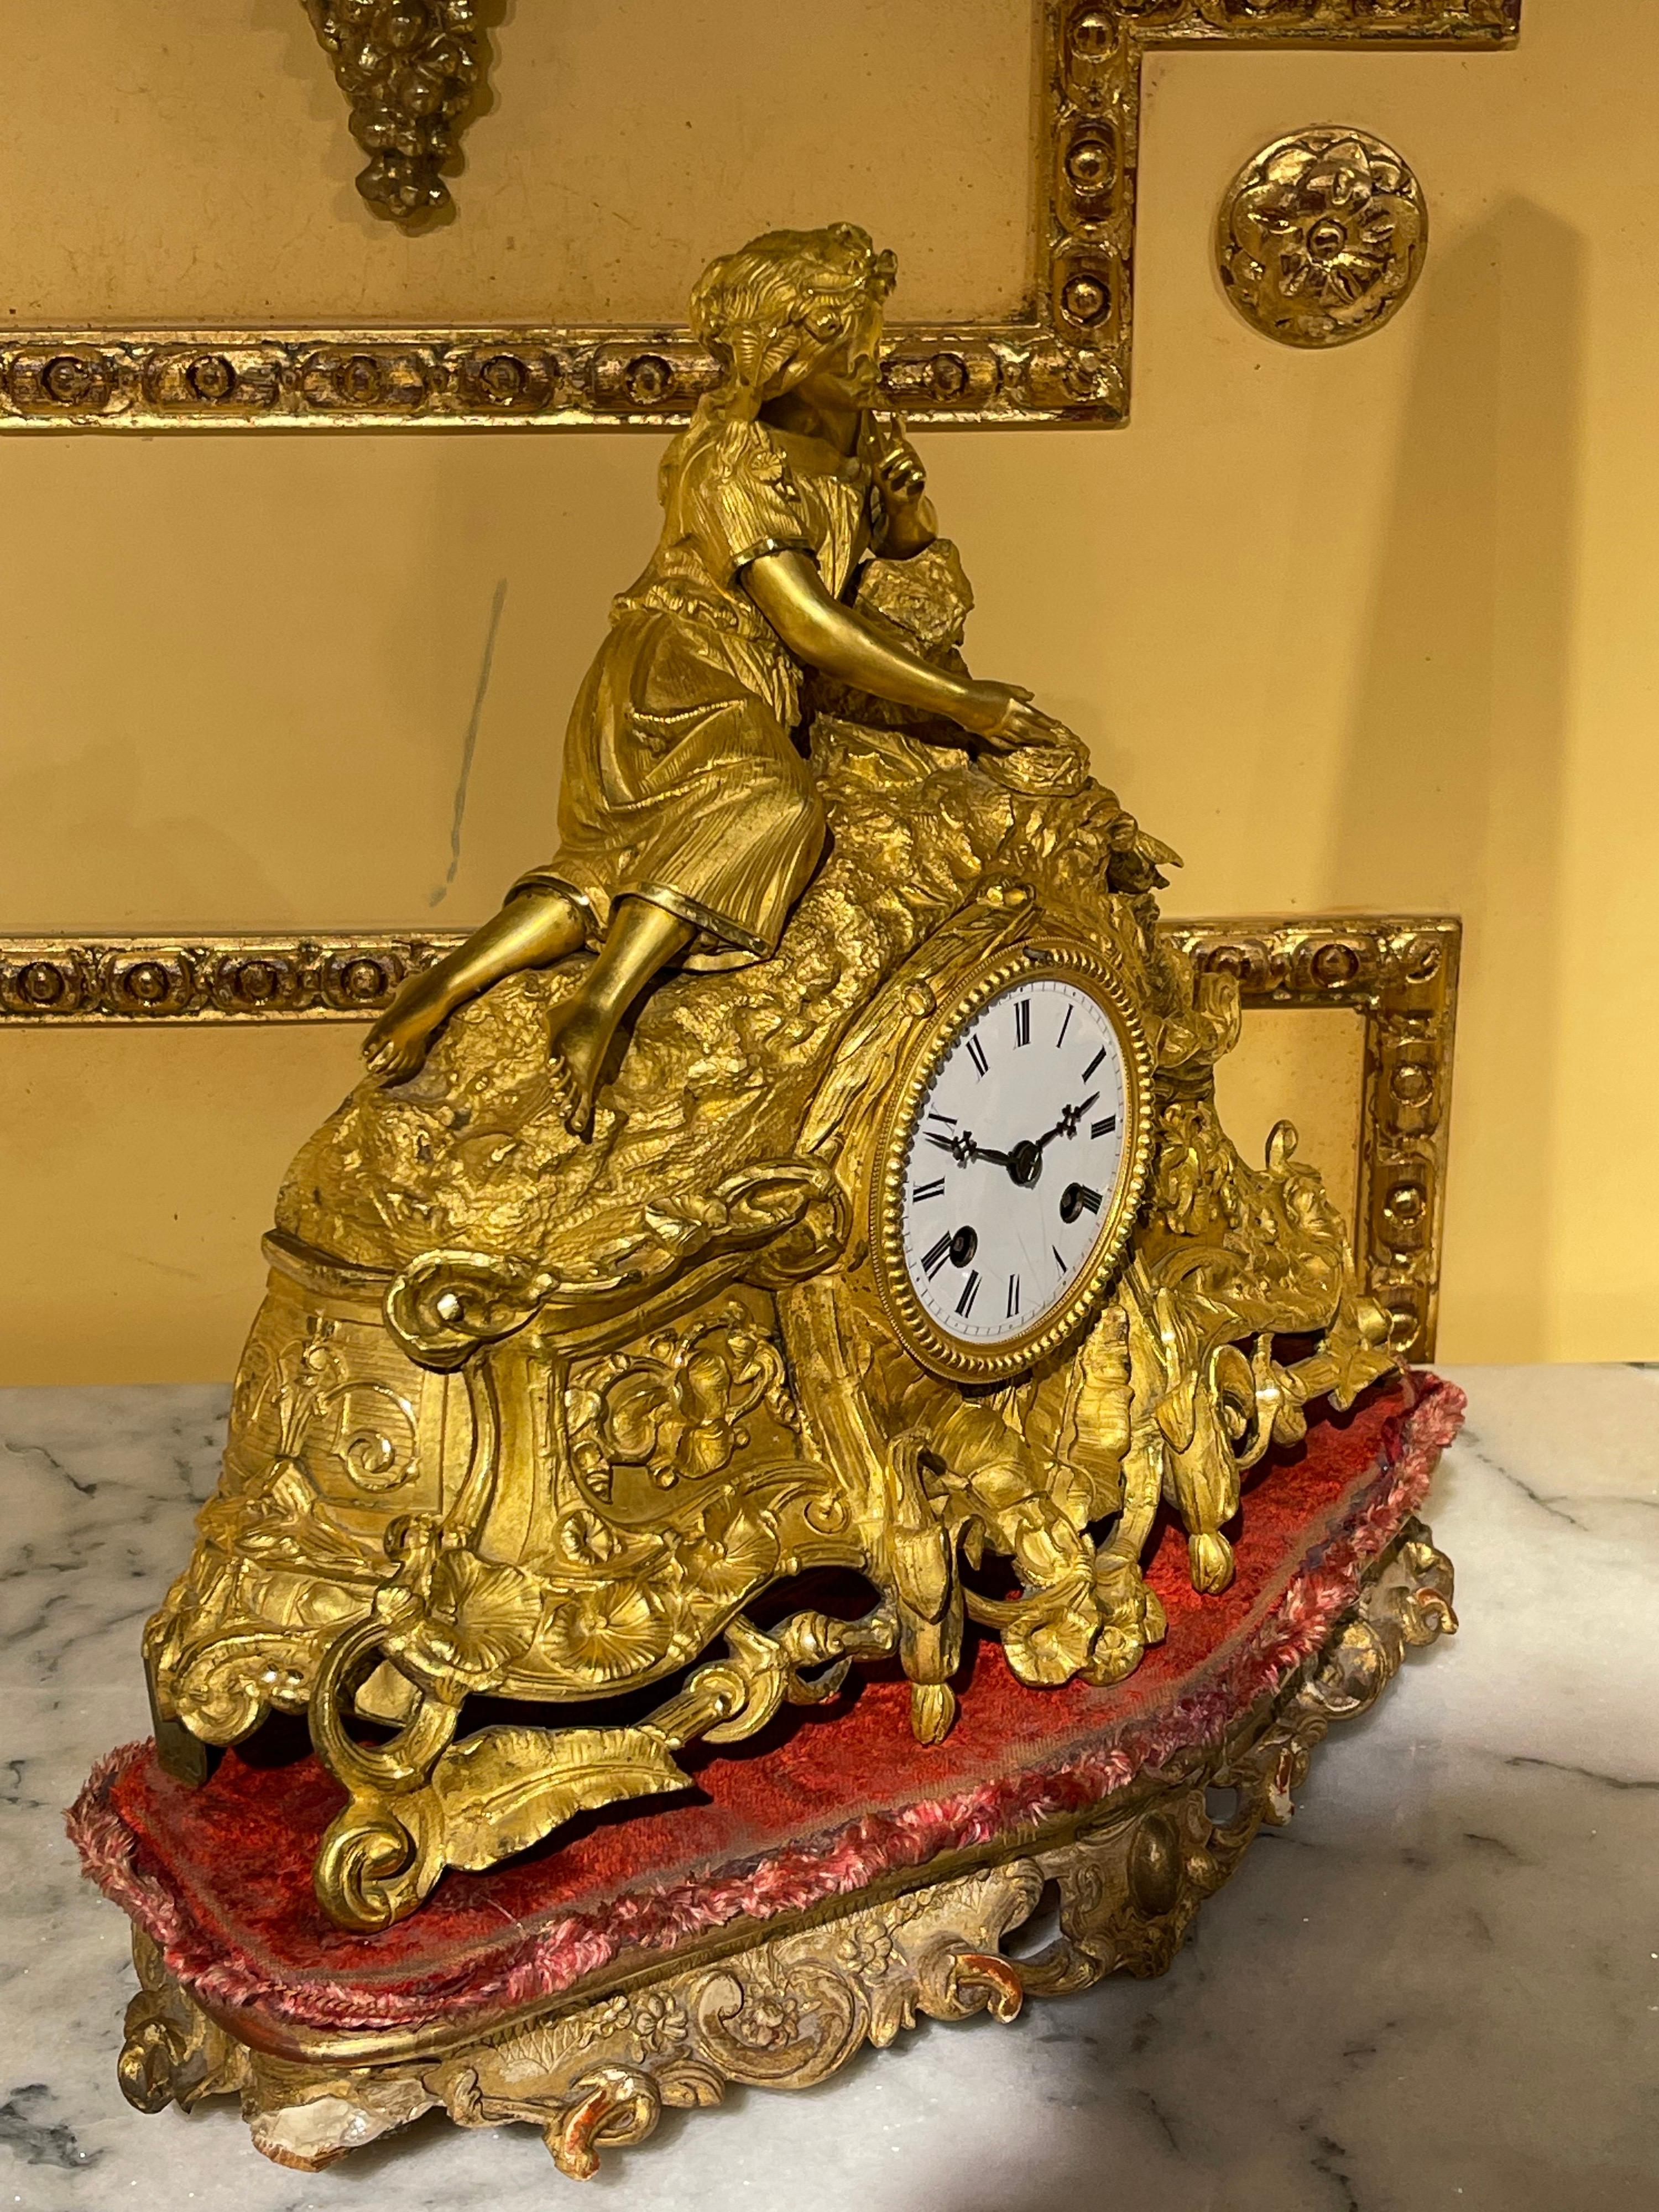 Late 19th Century French Mantel Clock / Pendulum Clock, Fire-Gilt, Around 1870-1880 For Sale